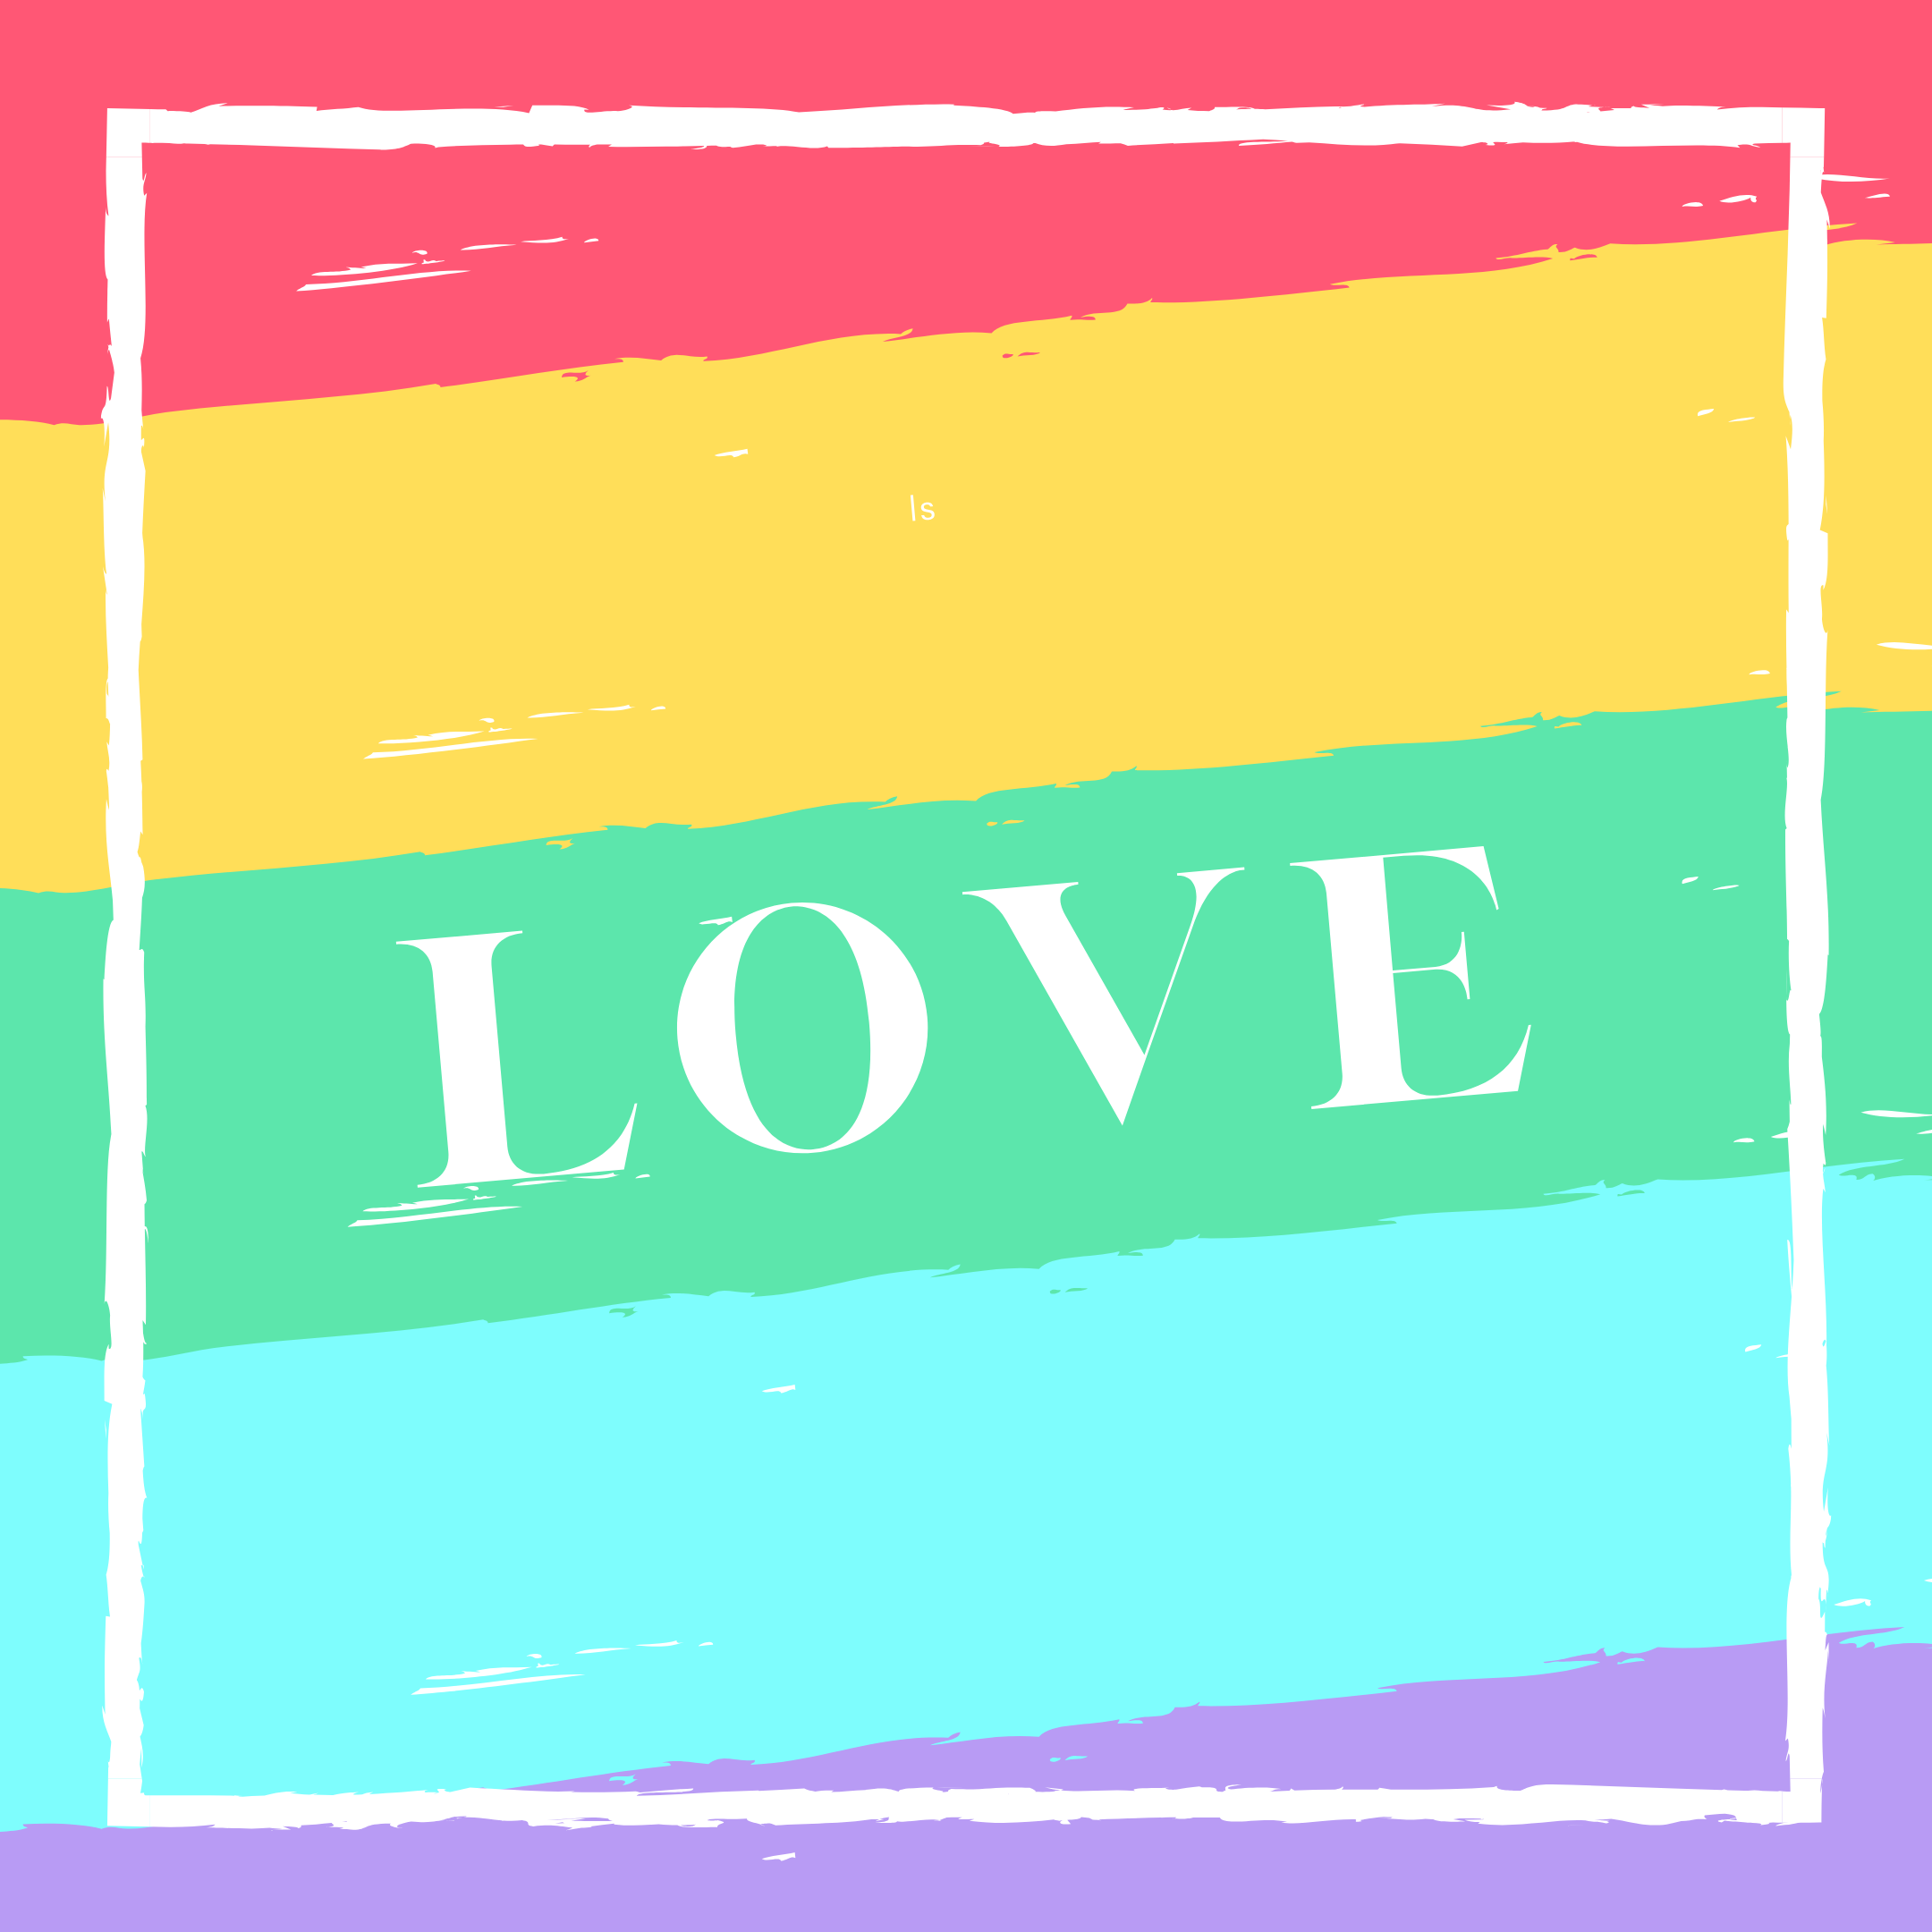 Pride, Supreme Court Decision, Civil rights, human rights, love is love